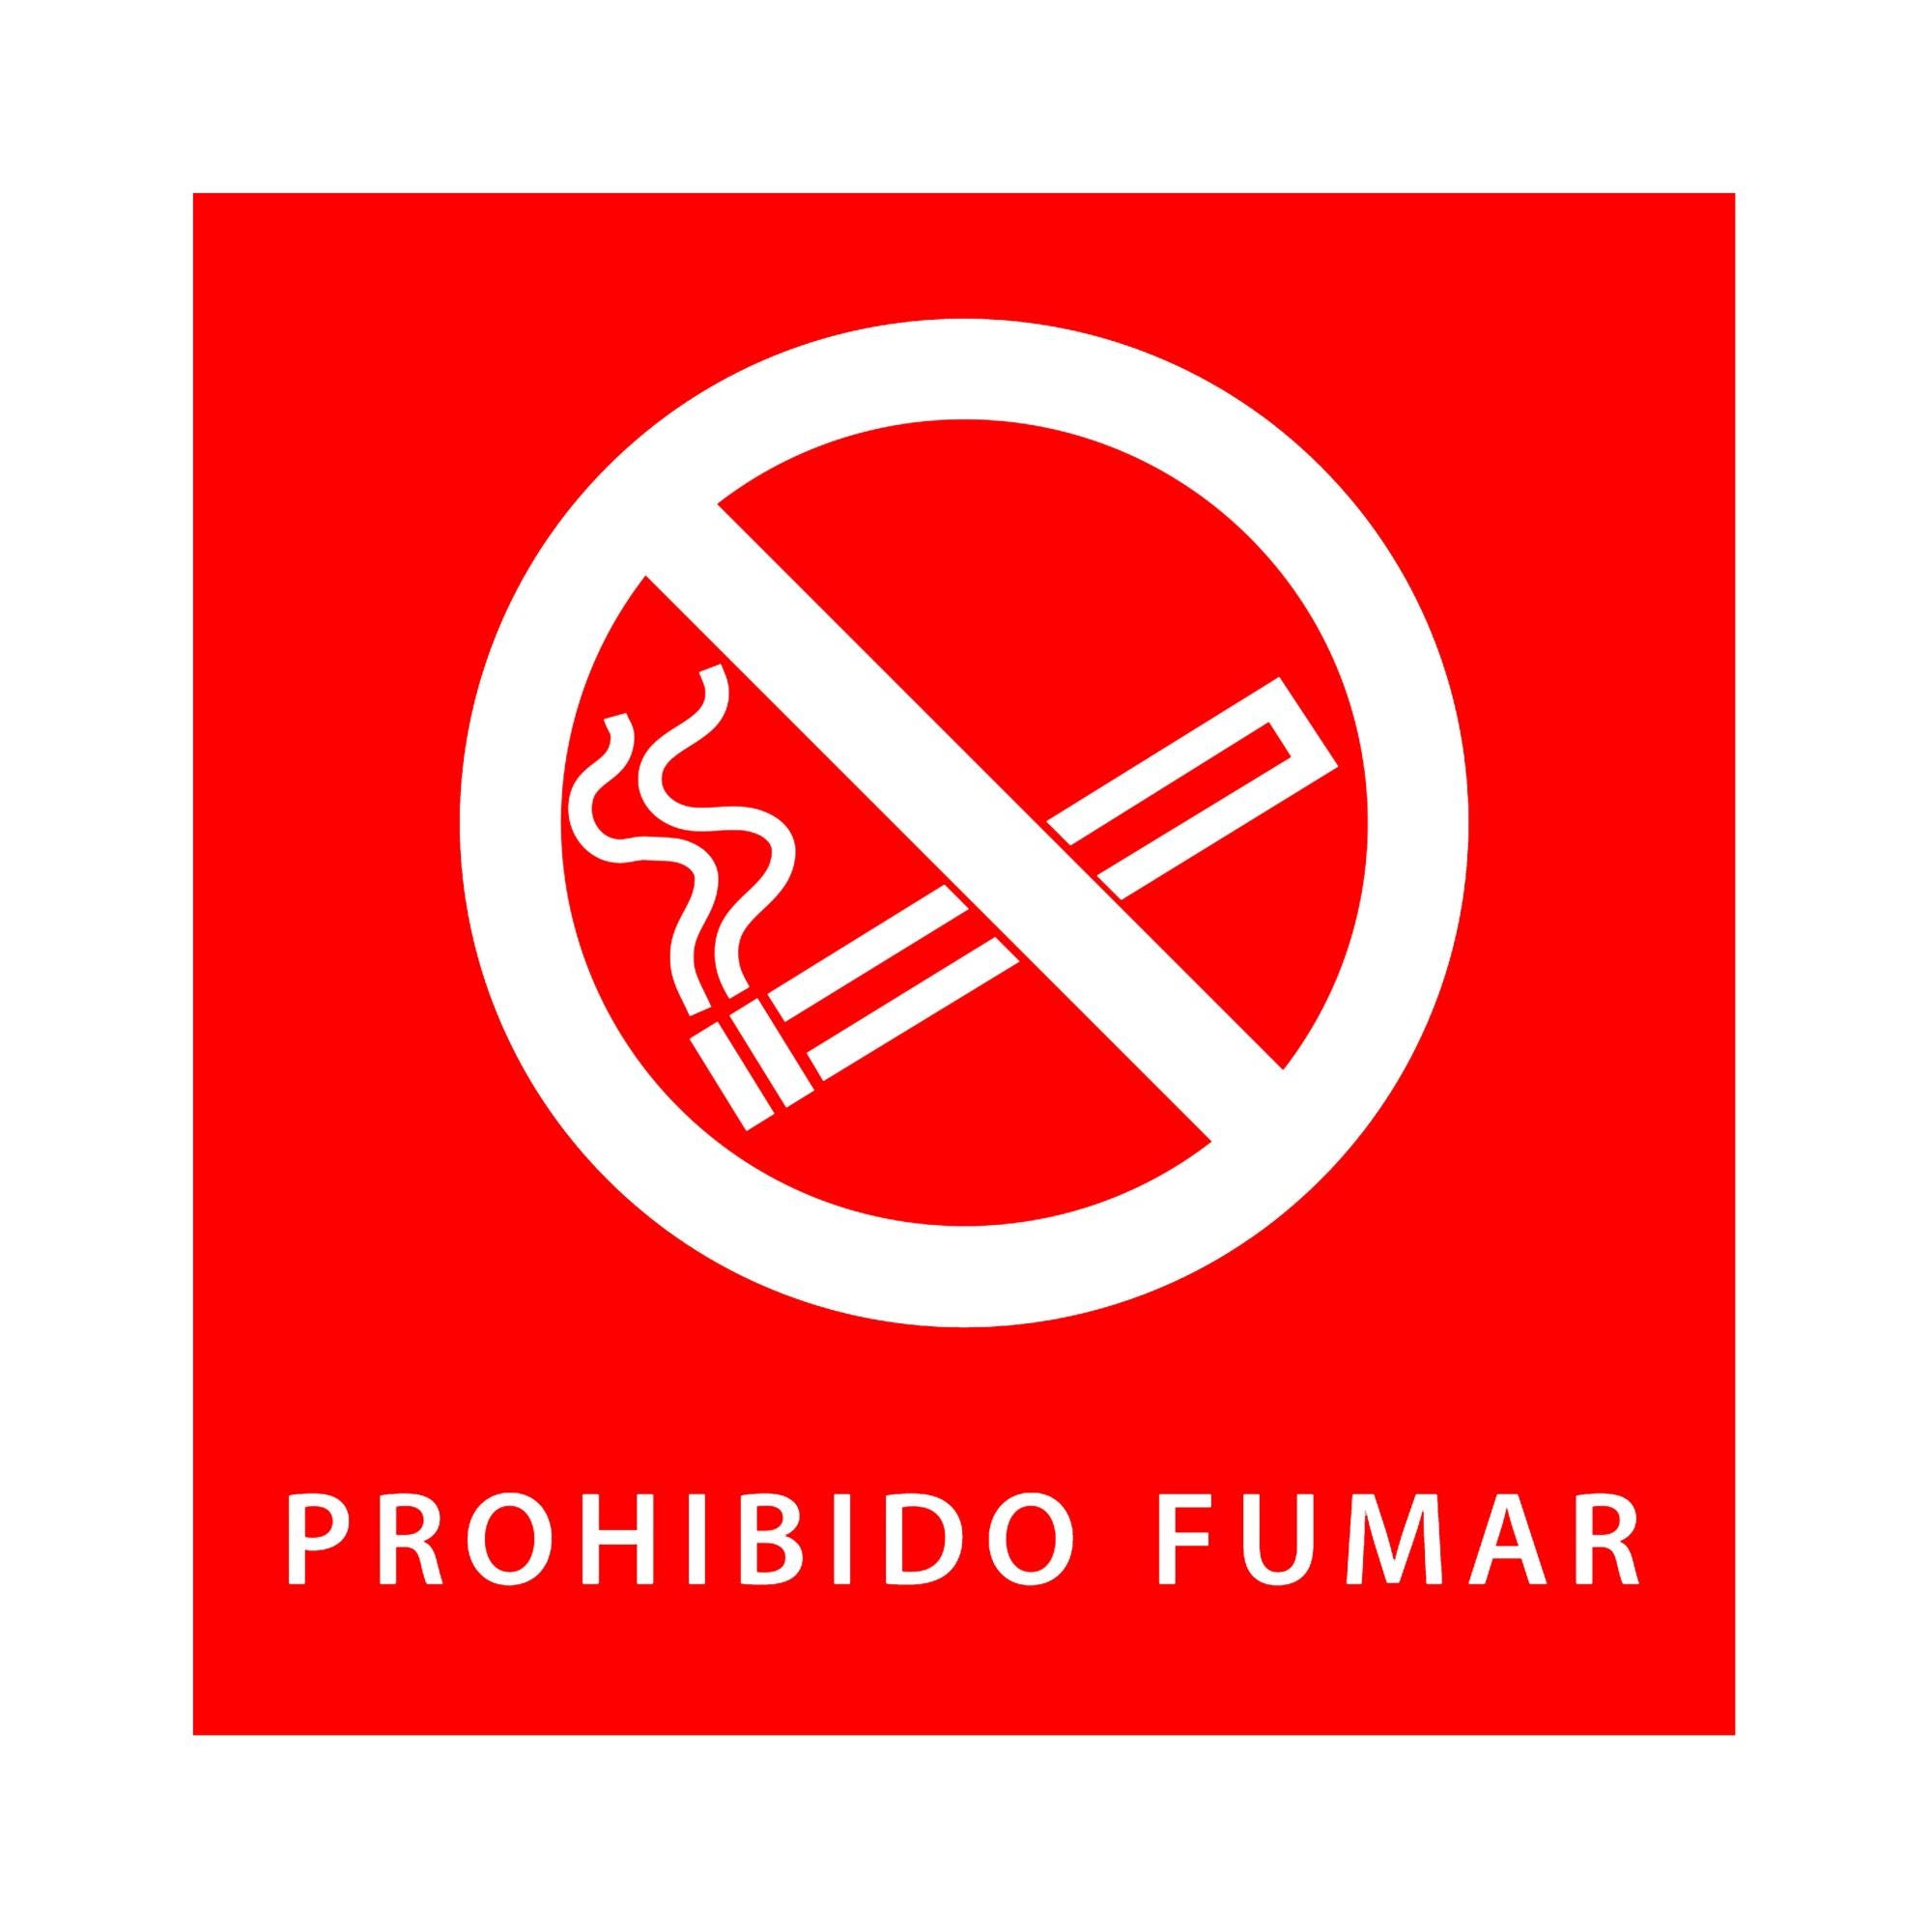 Cartel Prohibido Fumar - Rojo 🚭 Tamaño 25x35cm (B4) Material PVC 0,7mm